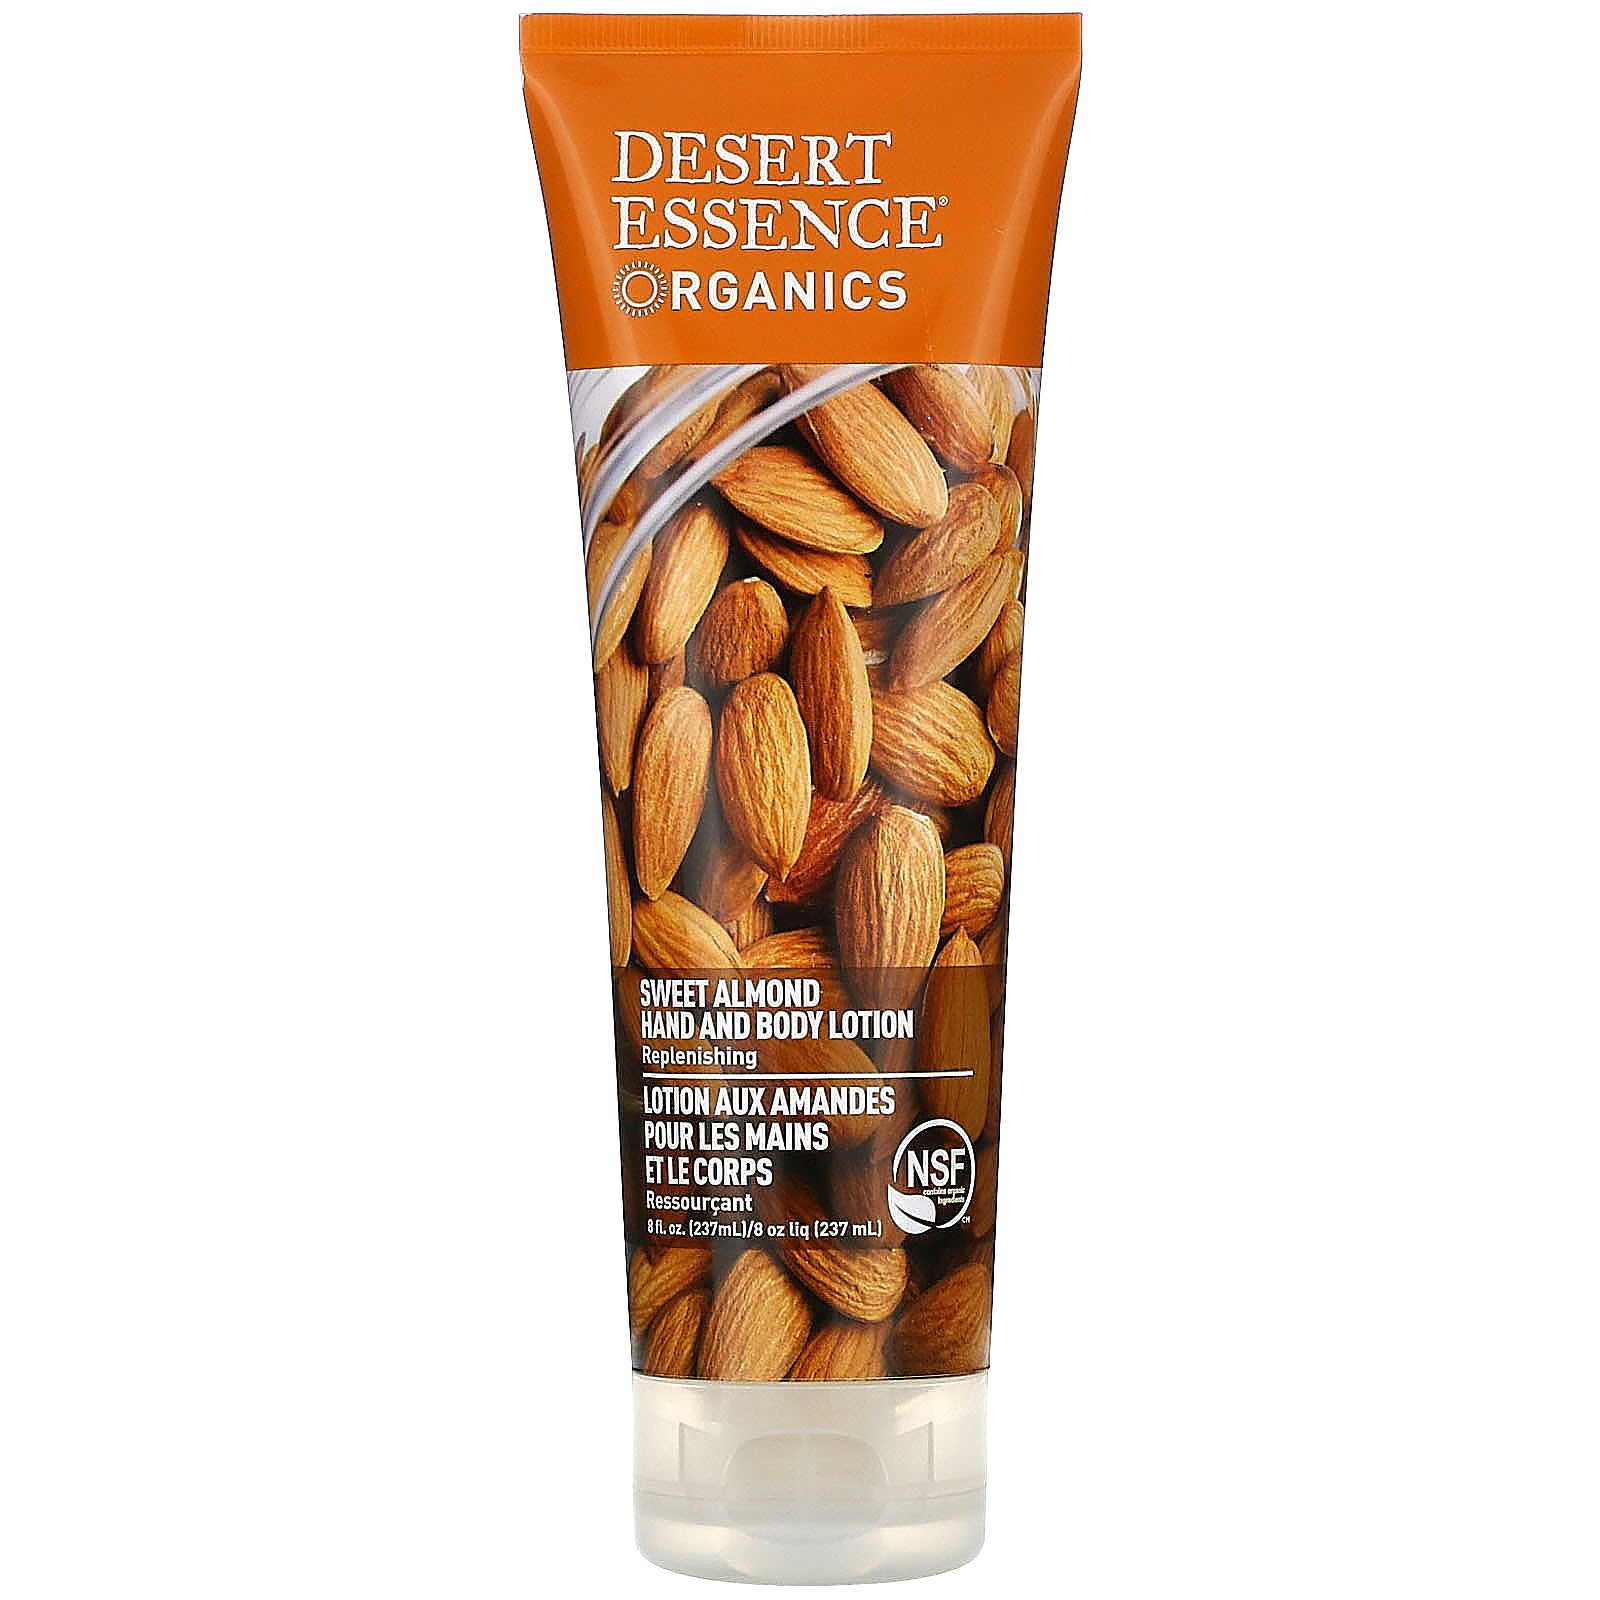 Desert Essence, Organics, Hand and Body Lotion, Sweet Almond, 8 fl oz (237 ml)